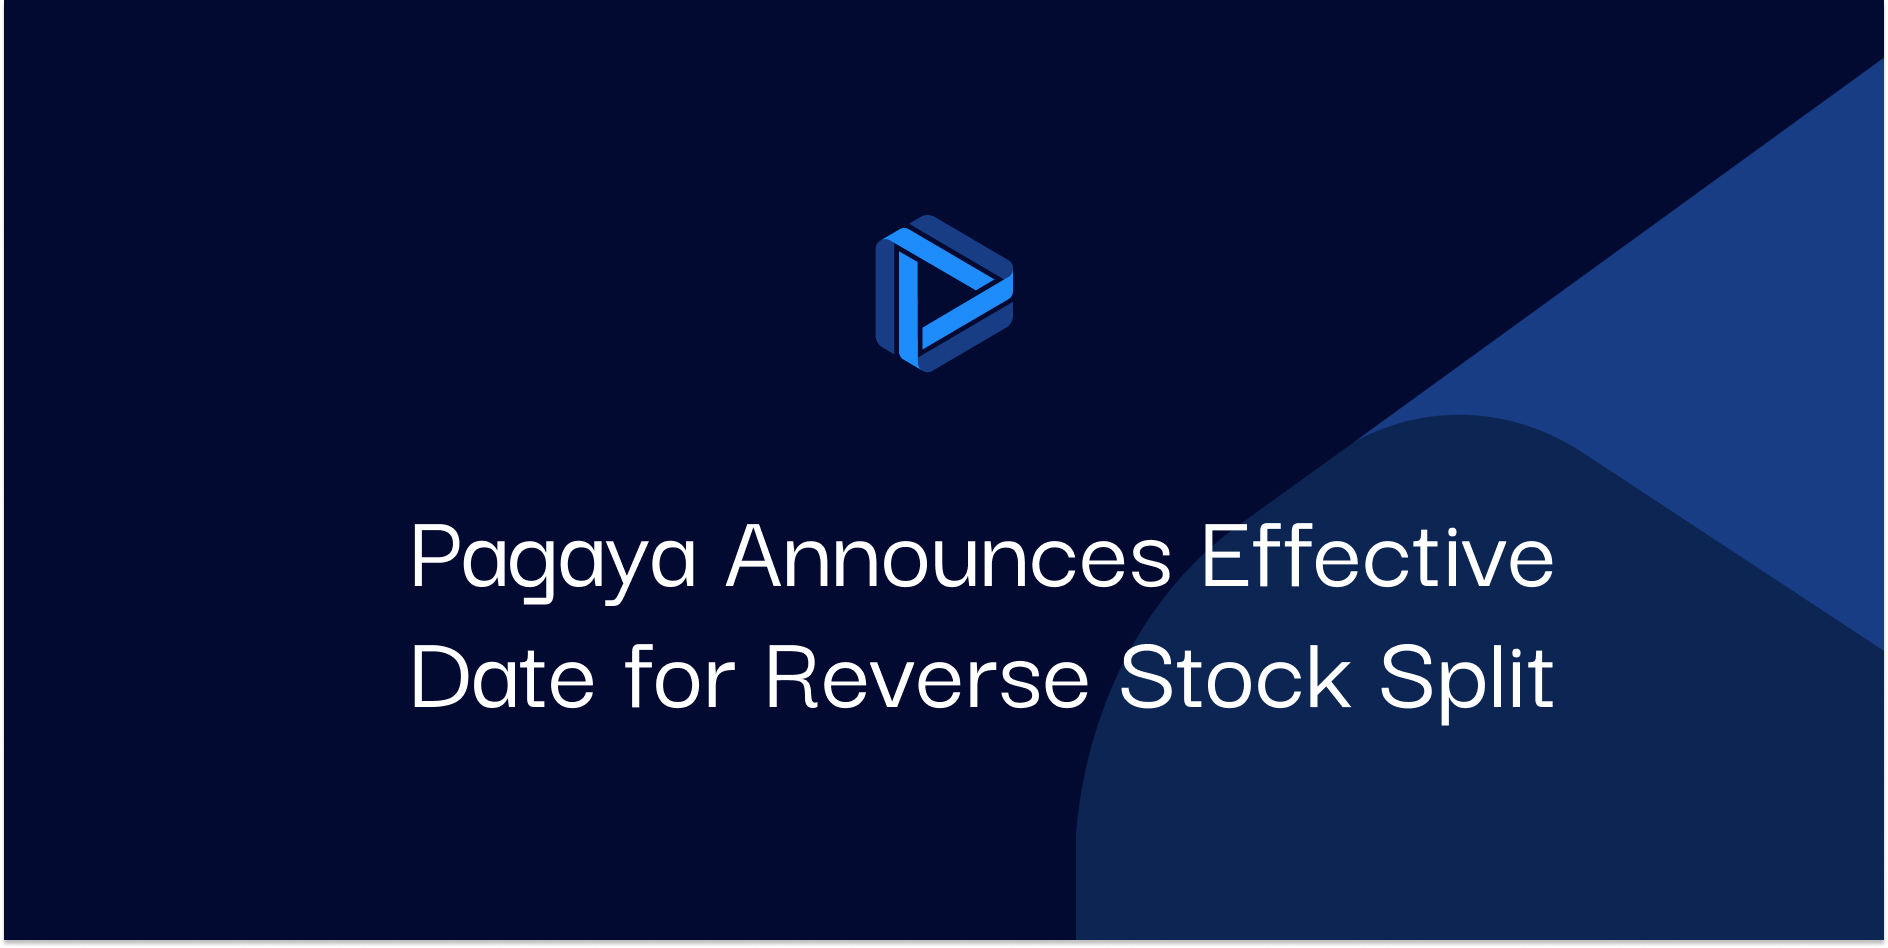 Pagaya Announces Effective Date for Reverse Stock Split